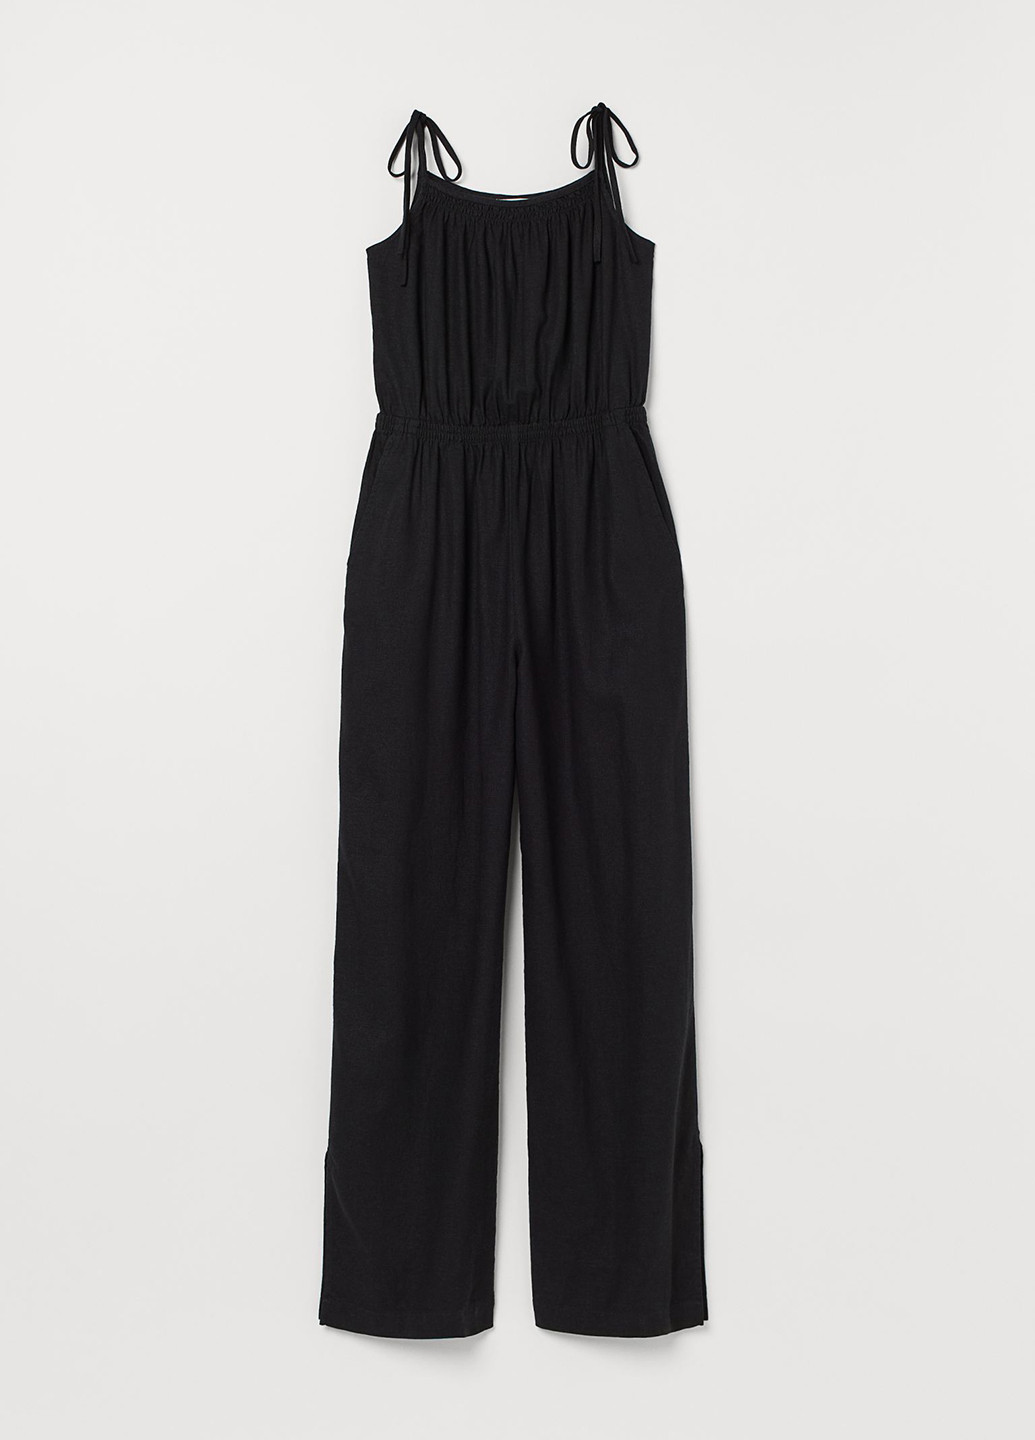 Комбинезон H&M комбинезон-брюки однотонный чёрный кэжуал вискоза, лен